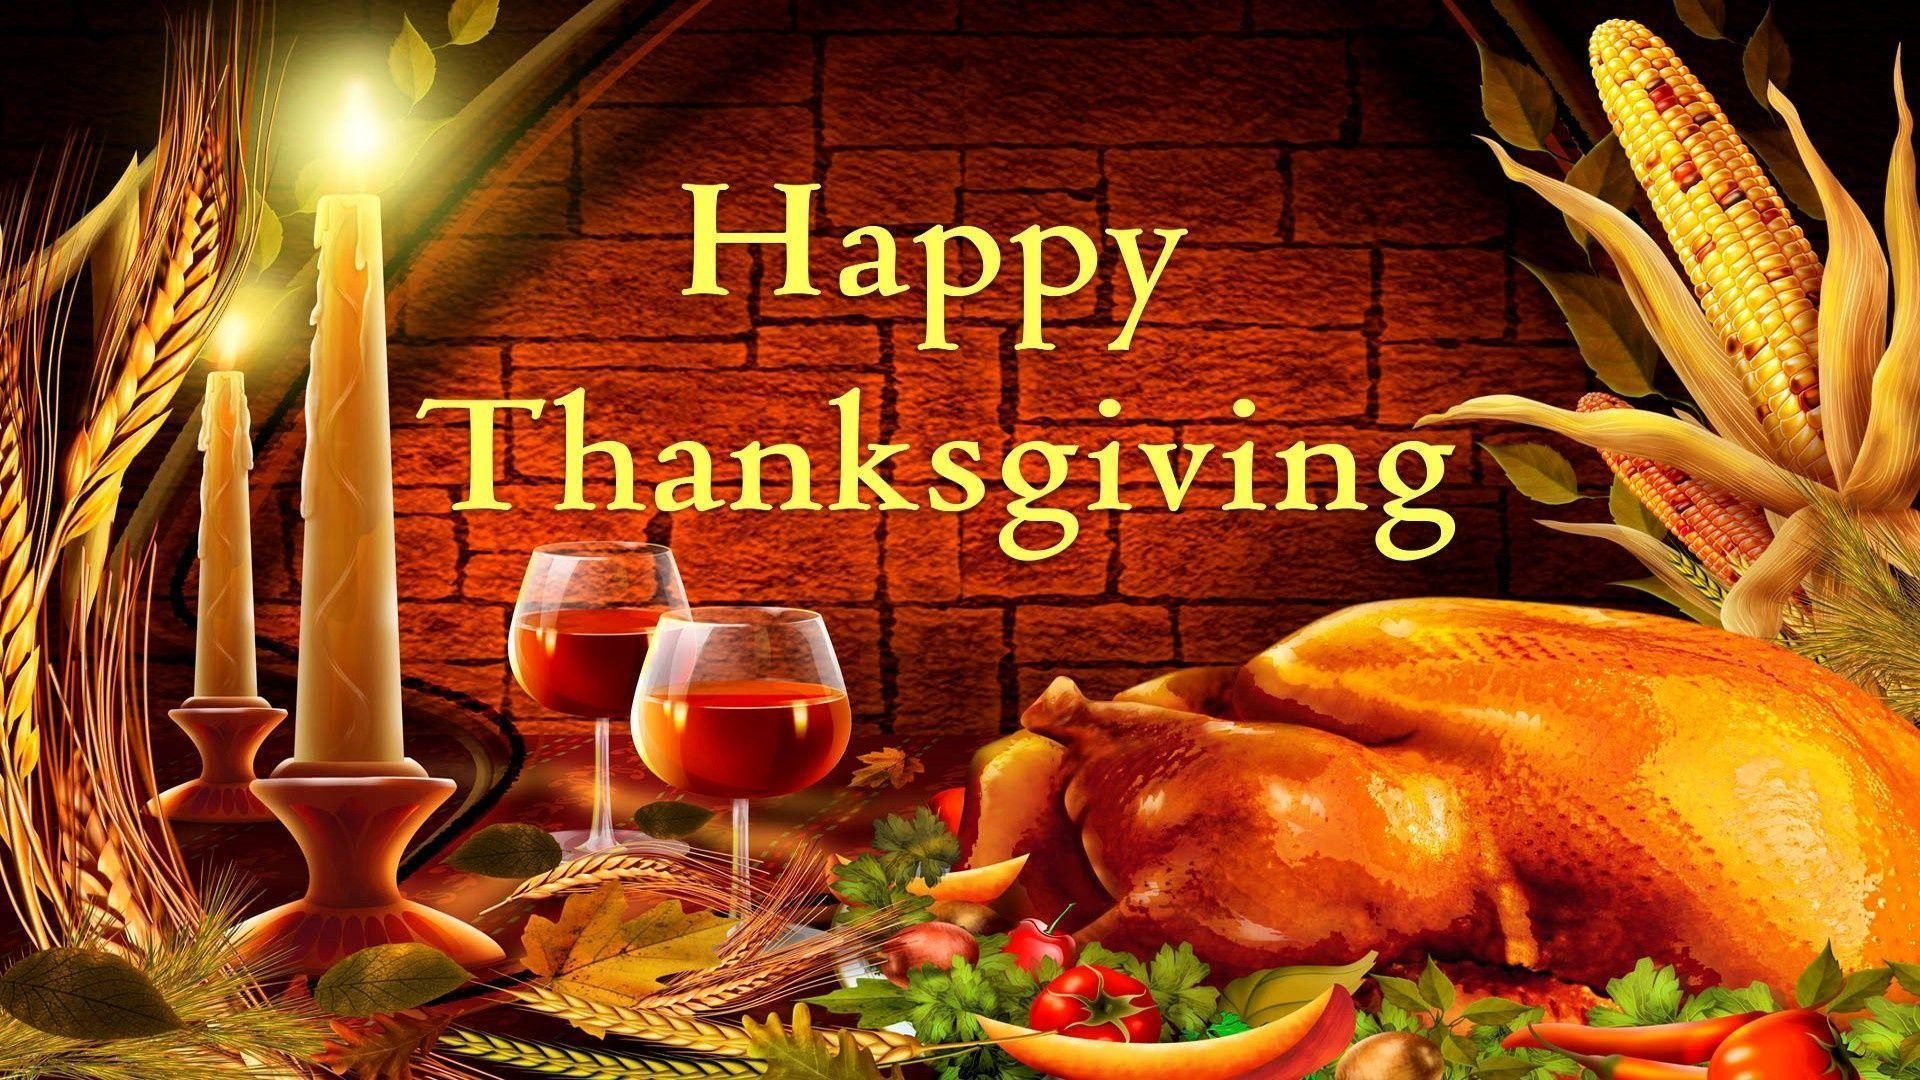 Happy Thanksgiving Wallpaper Image